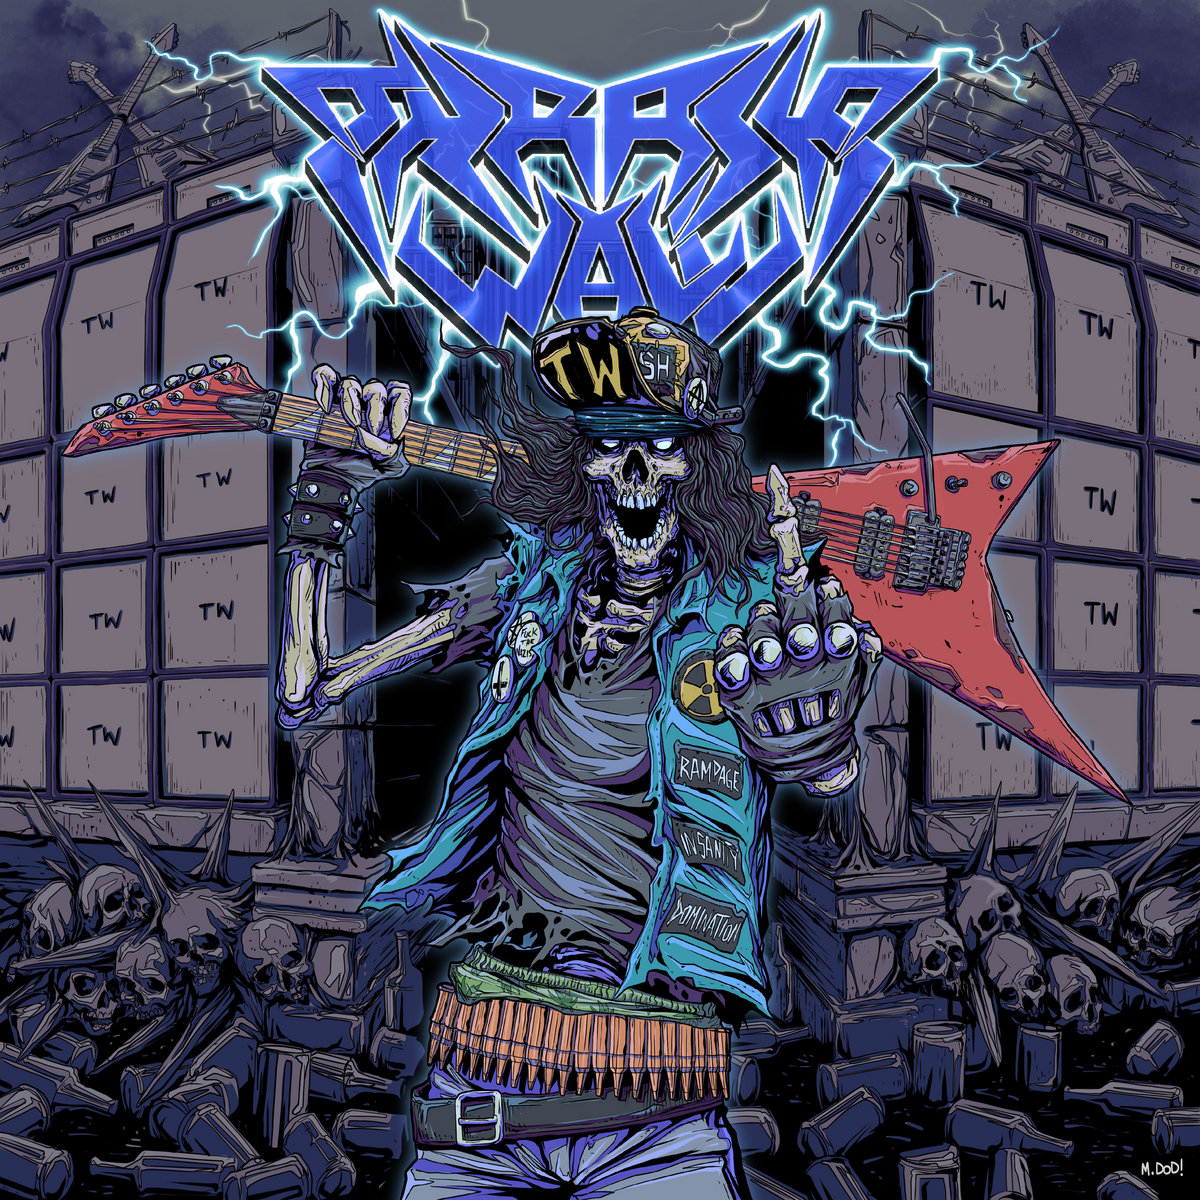 Yesterday's premiere

THRASHWALL -ThrashWall
Full-length
Firecum Rec. 2020 October 19th
Thrash Metal from Portugal

Bandcamp ▶️
thrashwall.bandcamp.com/album/thrashwa…